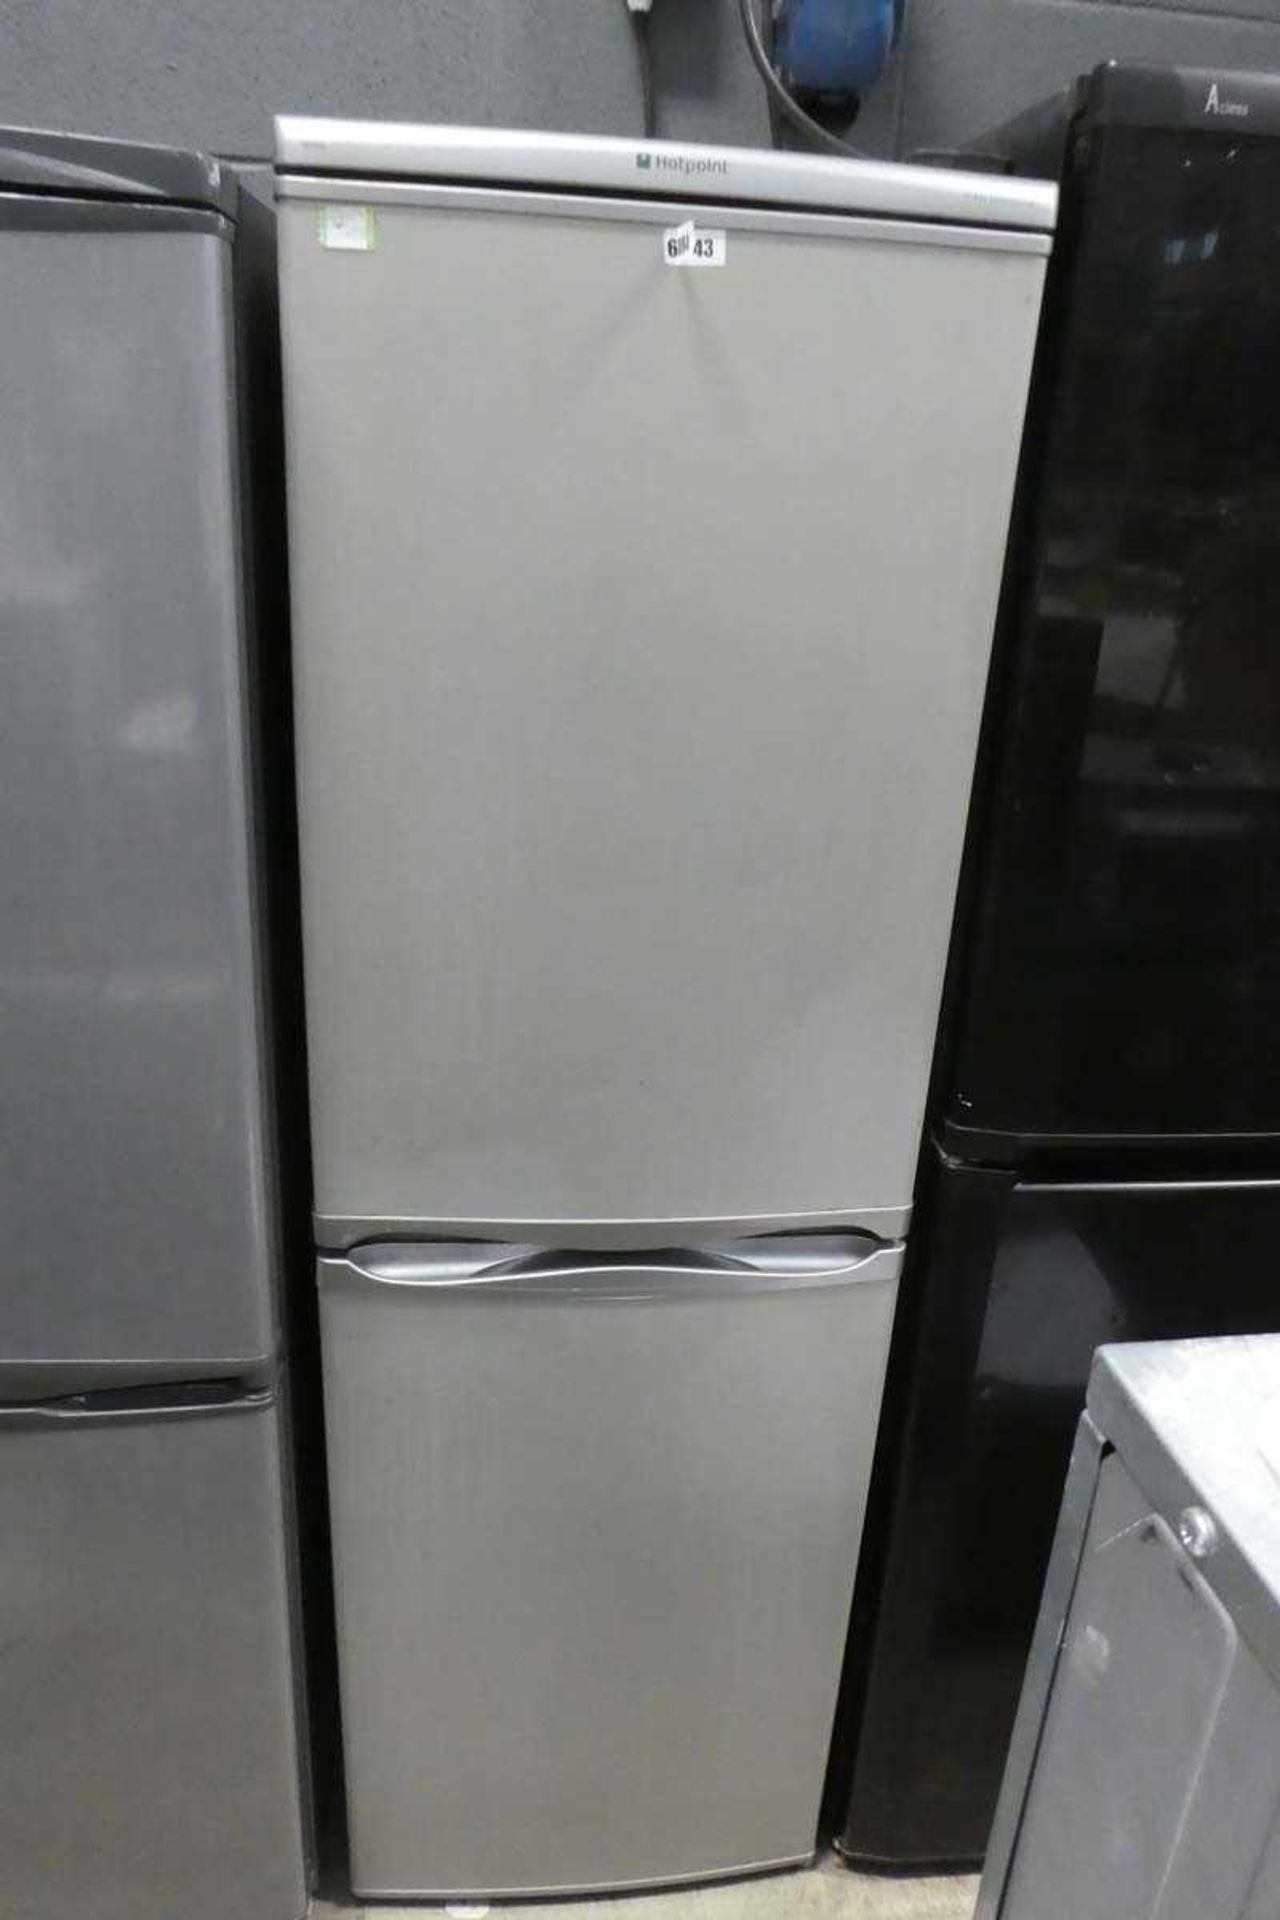 Silver Hotpoint fridge freezer